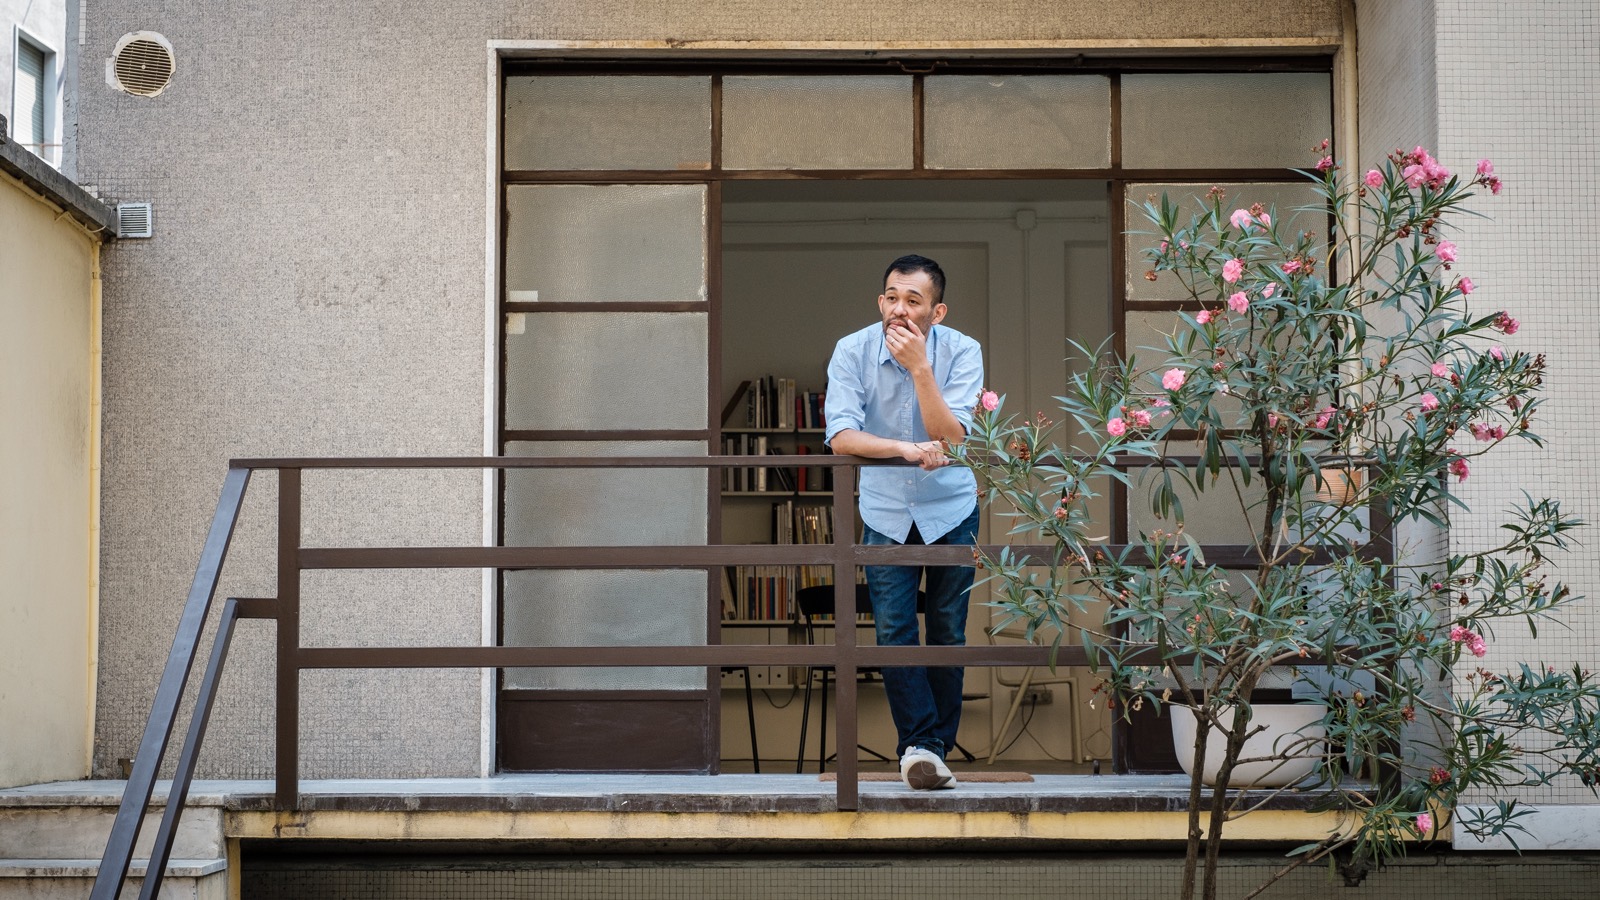 Designer Keiji Takeuchi stands outside his studio in Milan, Italy next to a flowering tree.